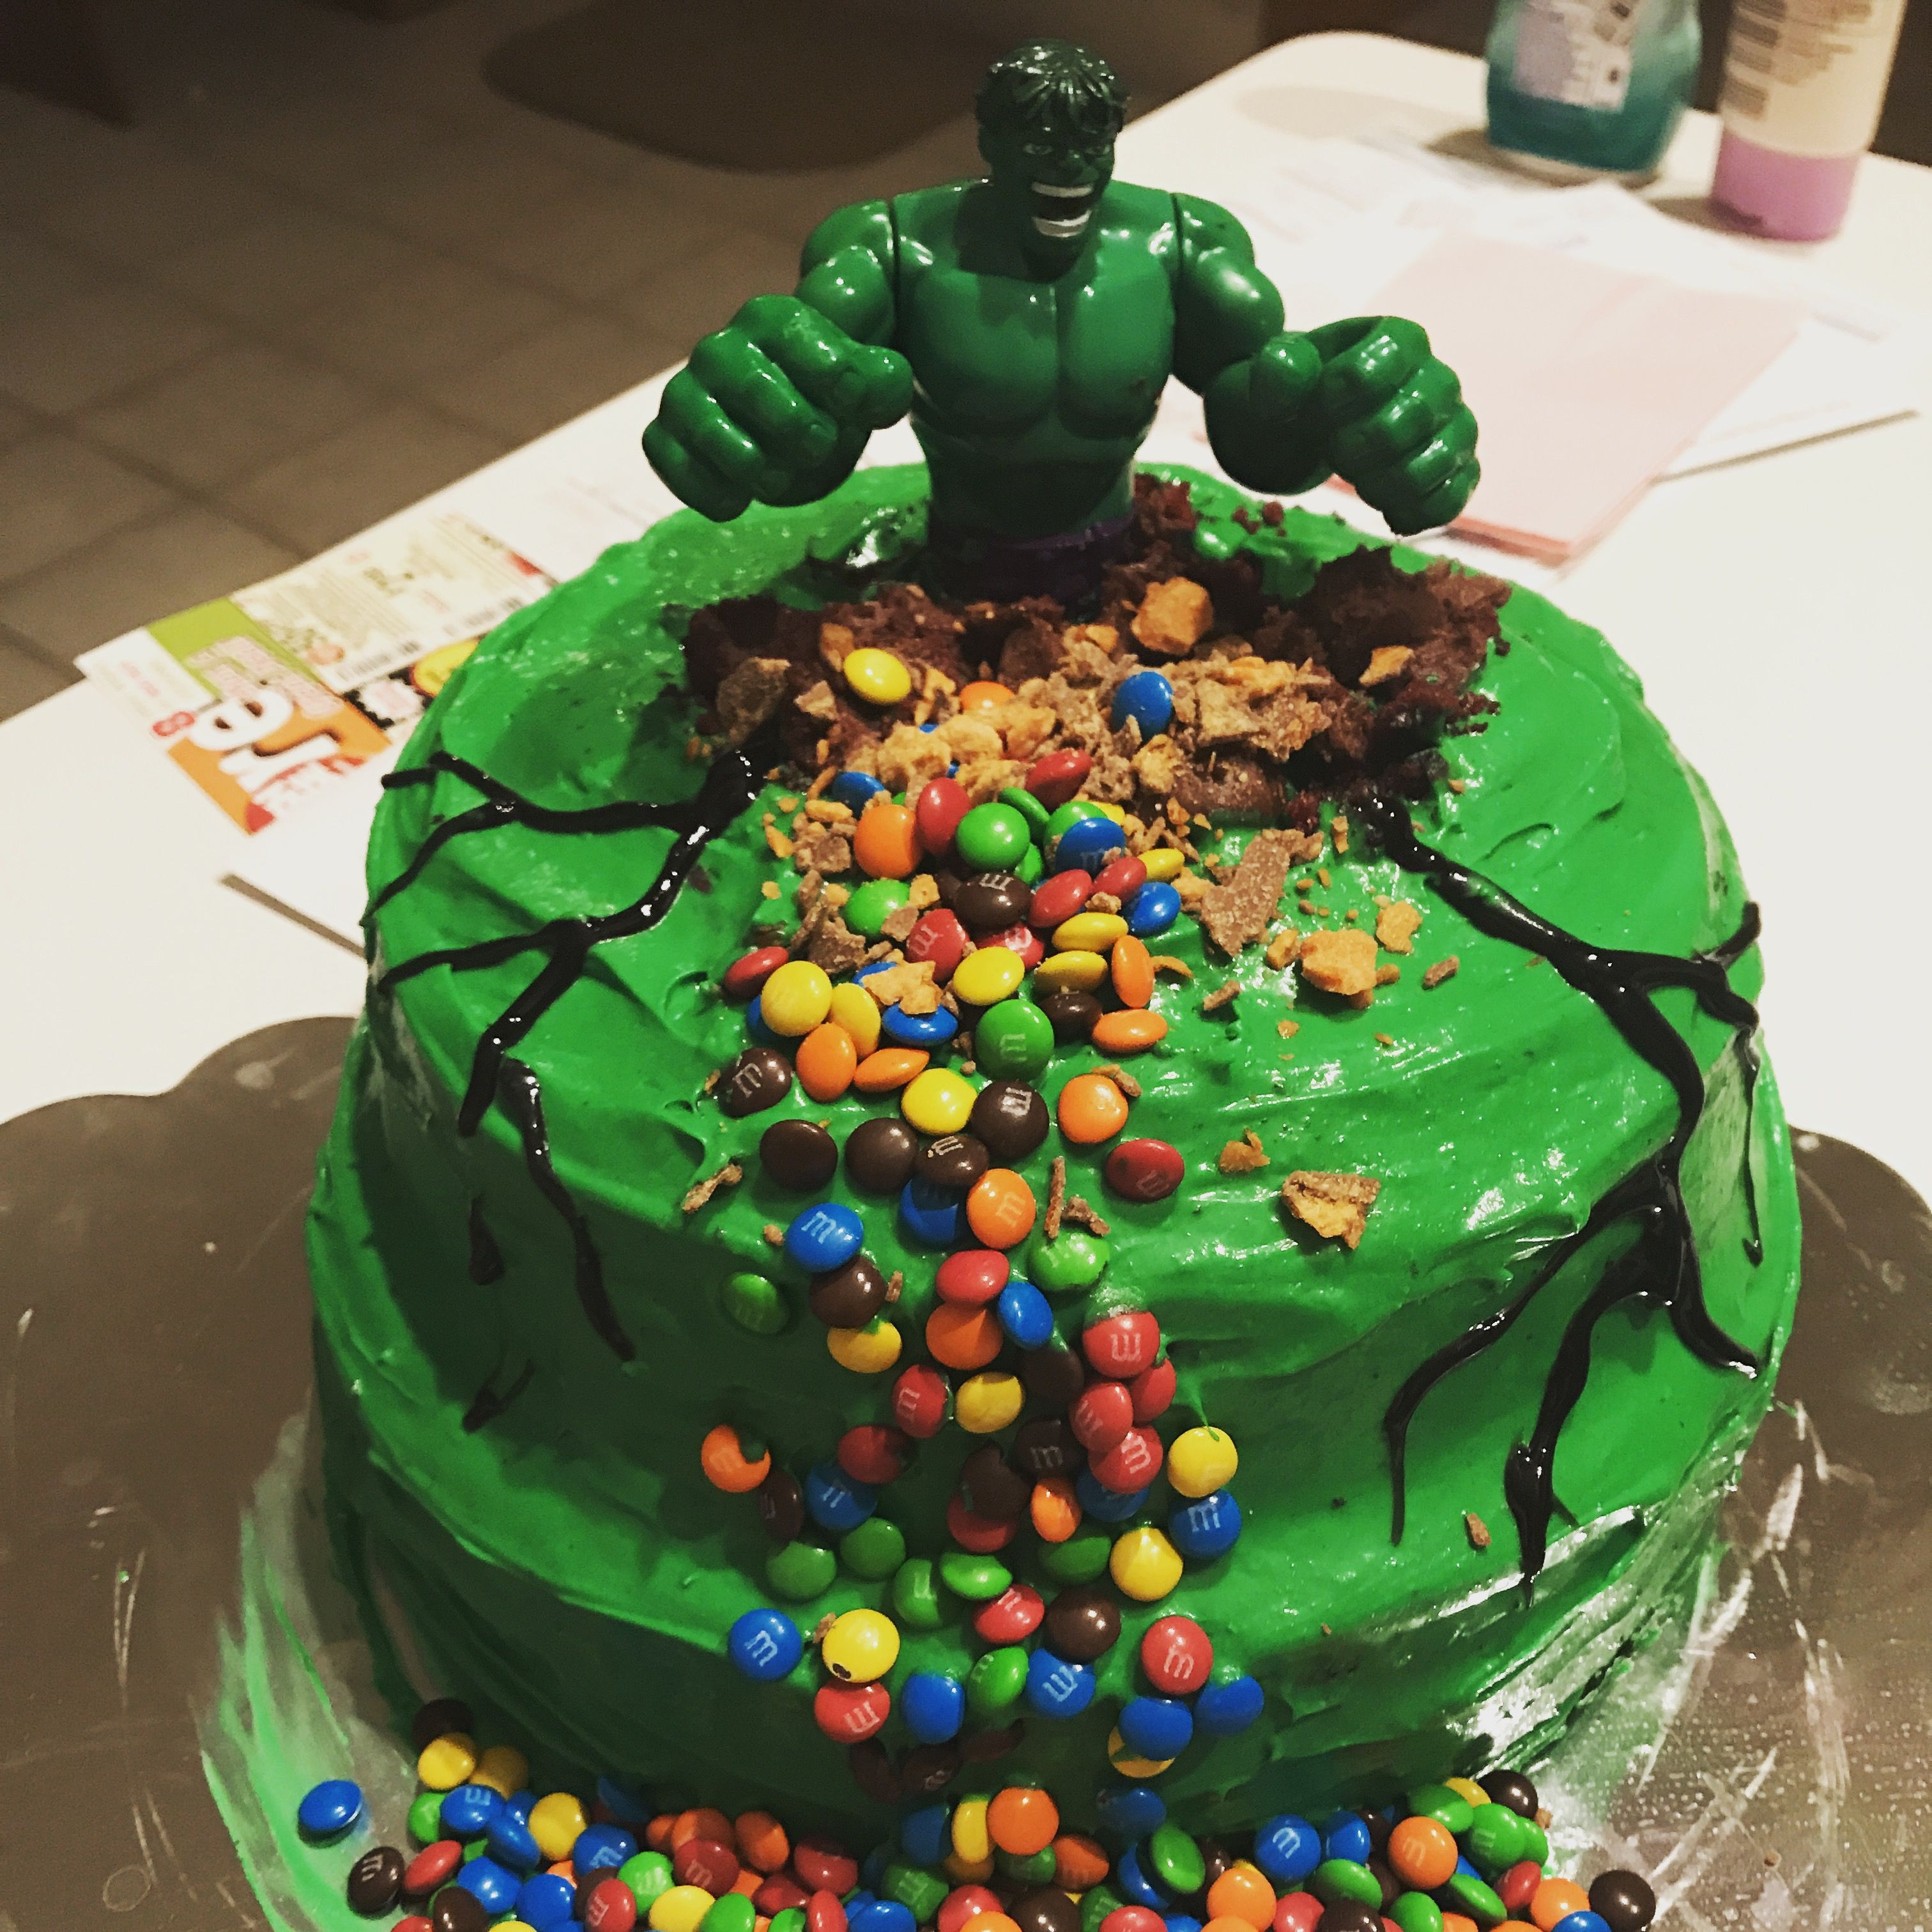 Best ideas about Hulk Birthday Cake
. Save or Pin Hulk smash cake Baby boy cakes ideas Now.